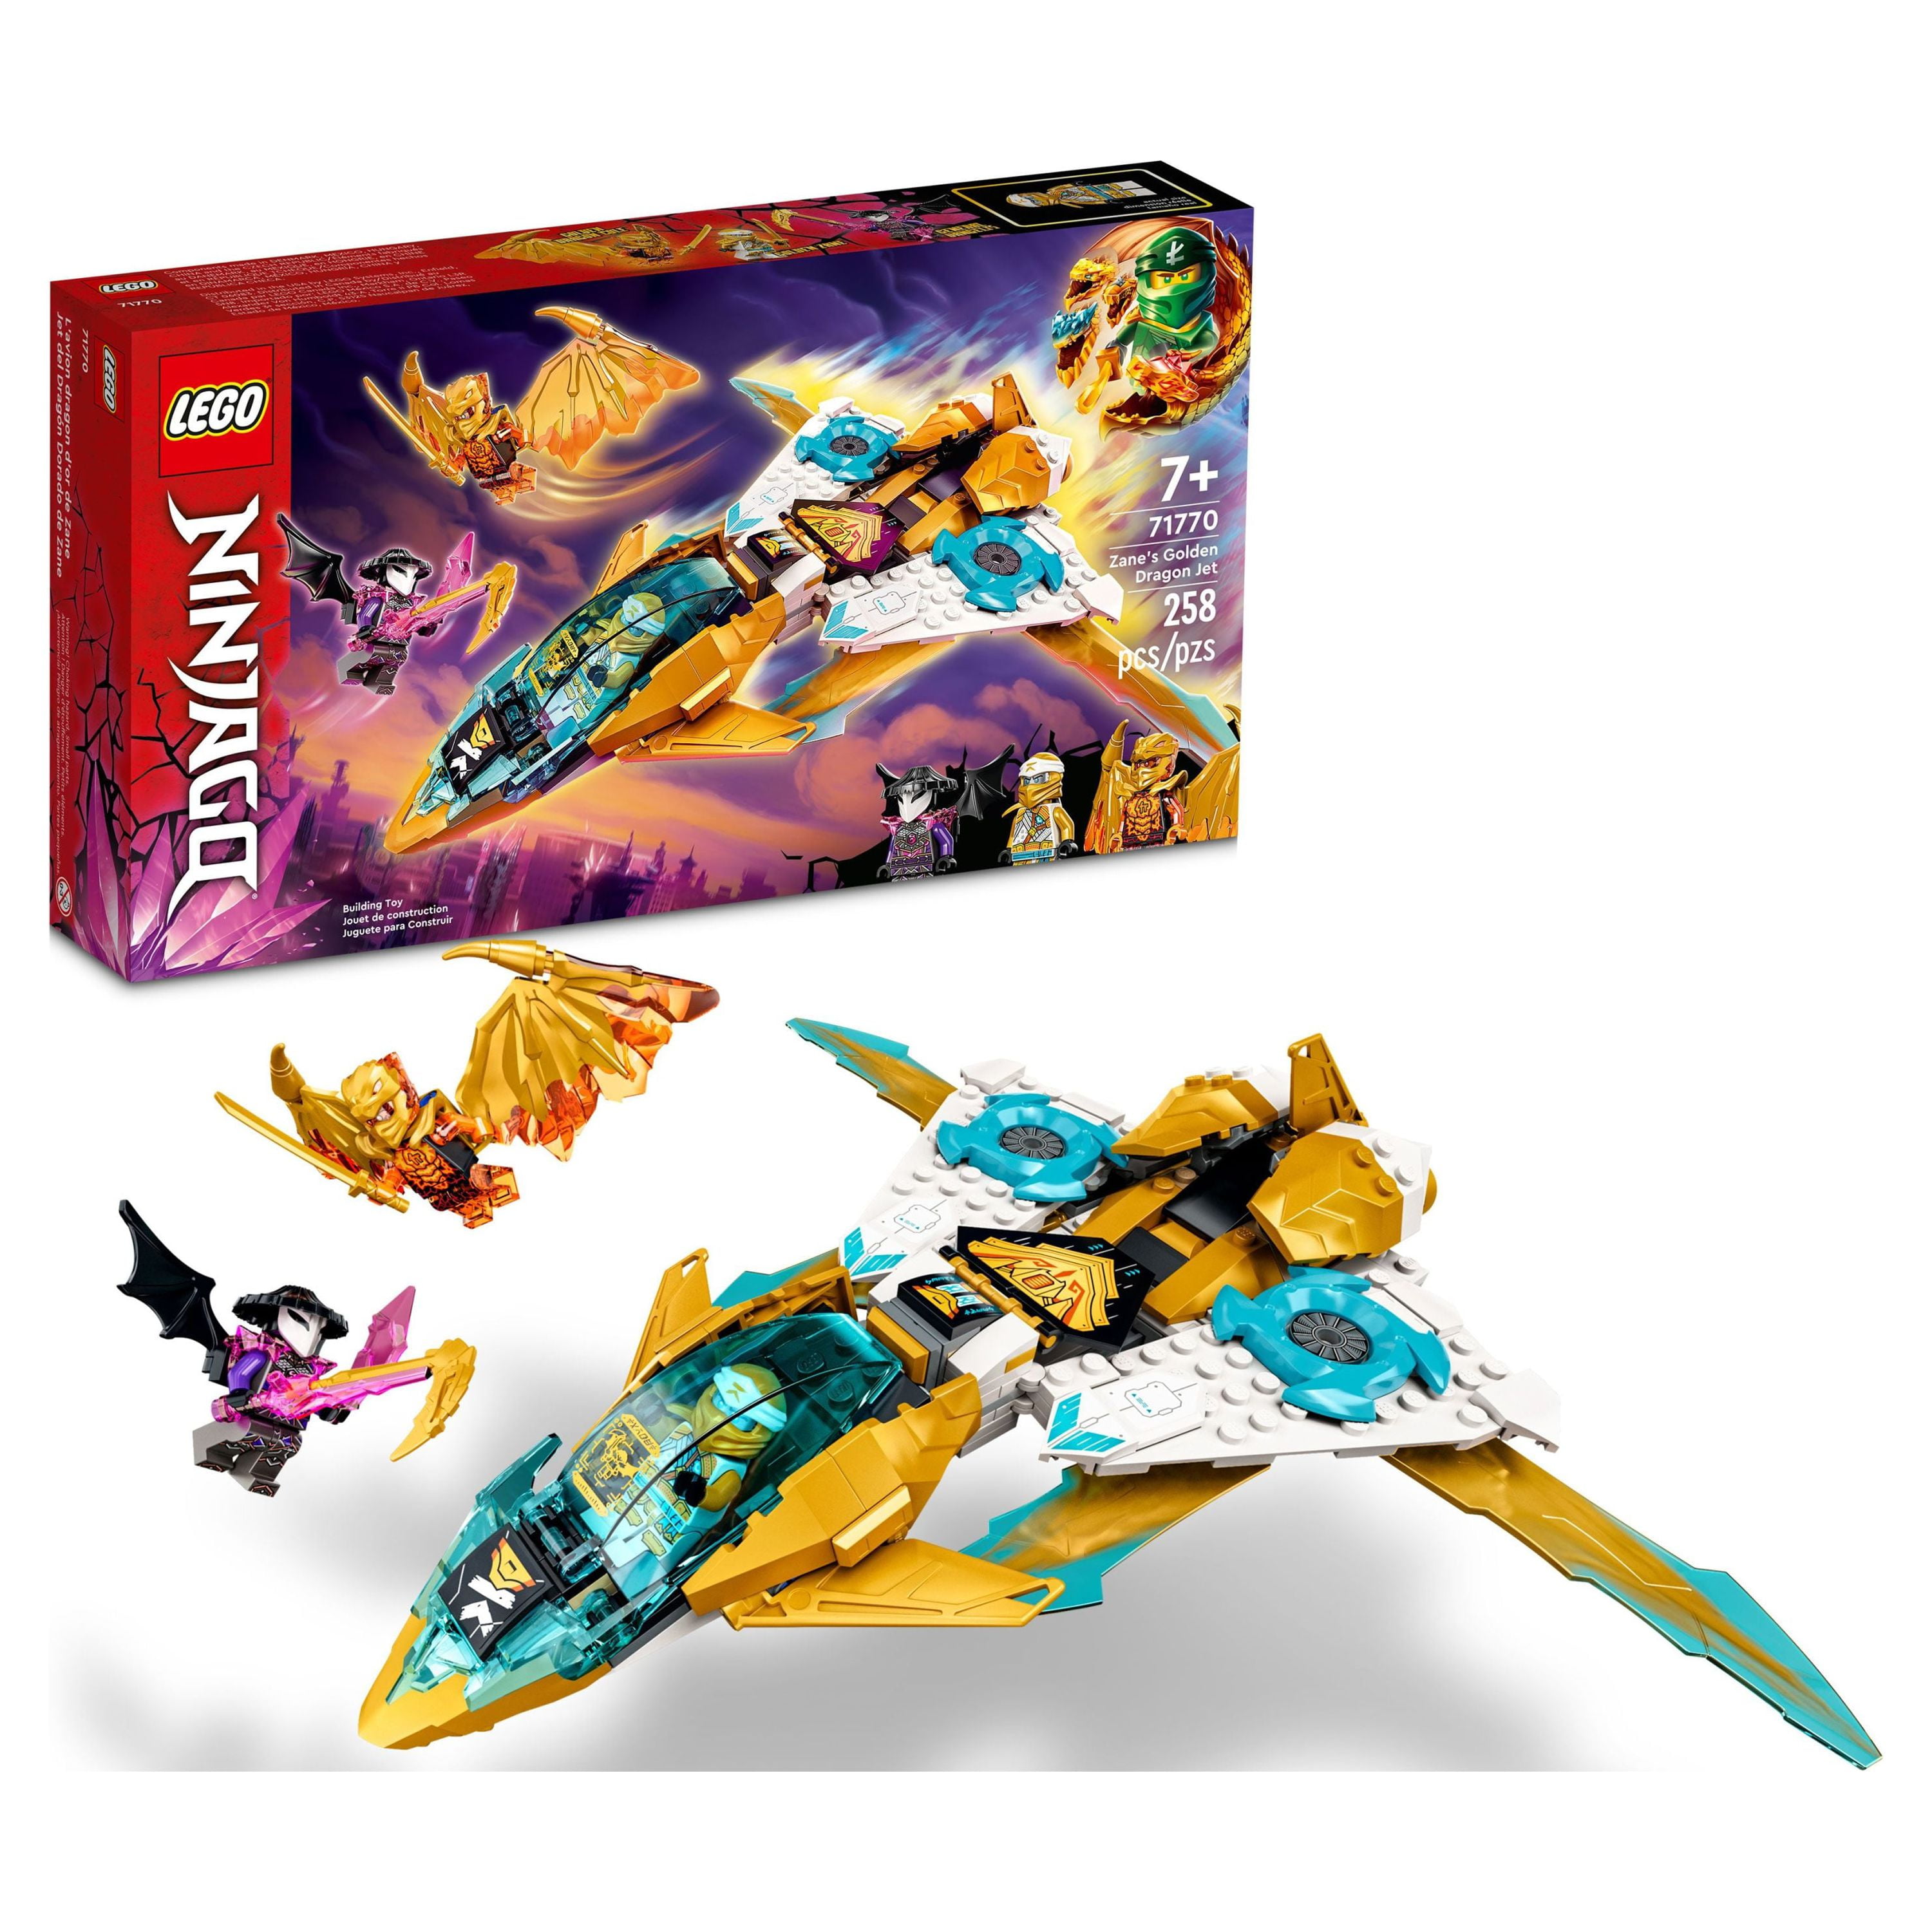 LEGO NINJAGO Zane's Golden Dragon Jet, 71770 Toy Plane Set, Birthday Gift  Idea for Kids, Boys and Girls 7 Plus Years Old with Cole & Zane Minifigures  